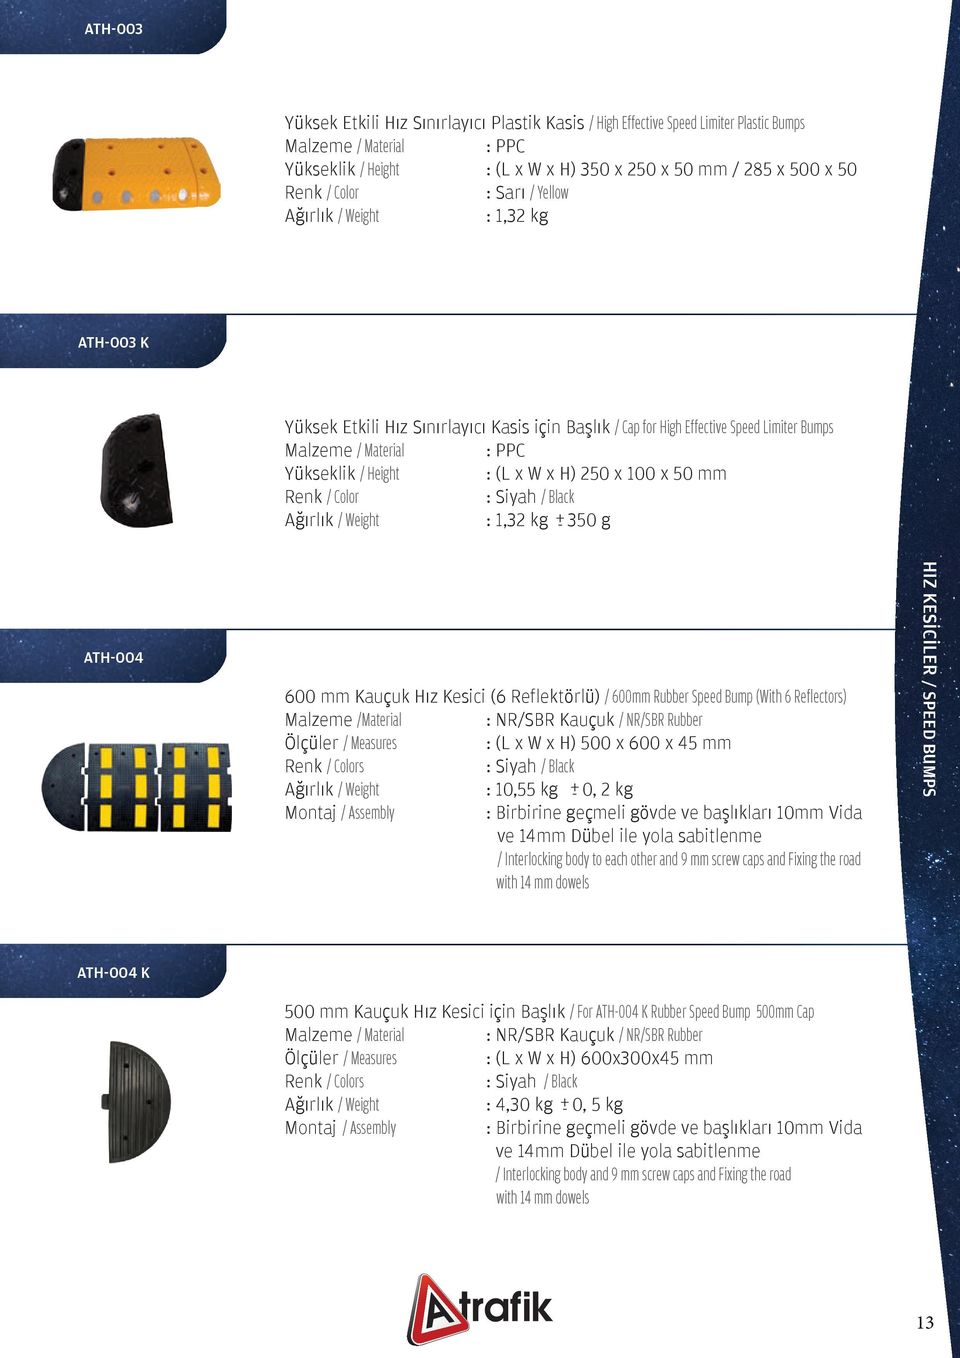 100 x 50 mm Renk / Color : Siyah / Black : 1,32 kg + - 350 g ATH-004 600 mm Kauçuk Hız Kesici (6 Reflektörlü) / 600mm Rubber Speed Bump (With 6 Reflectors) Malzeme /Material : NR/SBR Kauçuk / NR/SBR